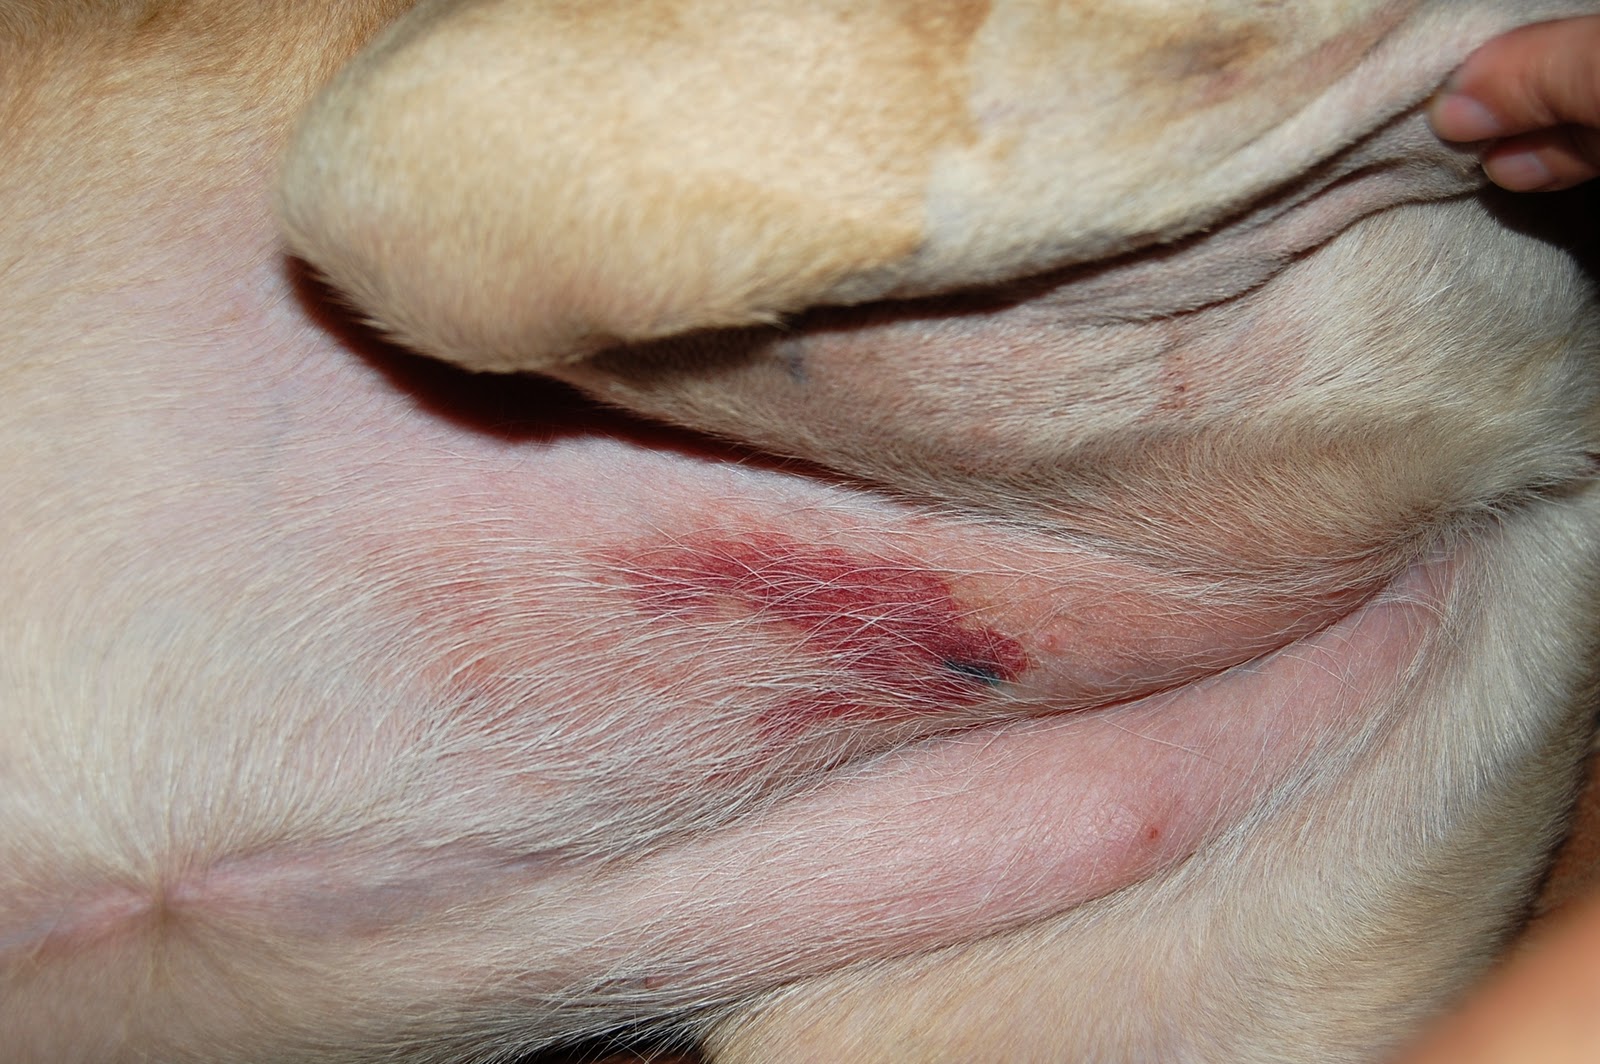 snake bite injury to dog's belly